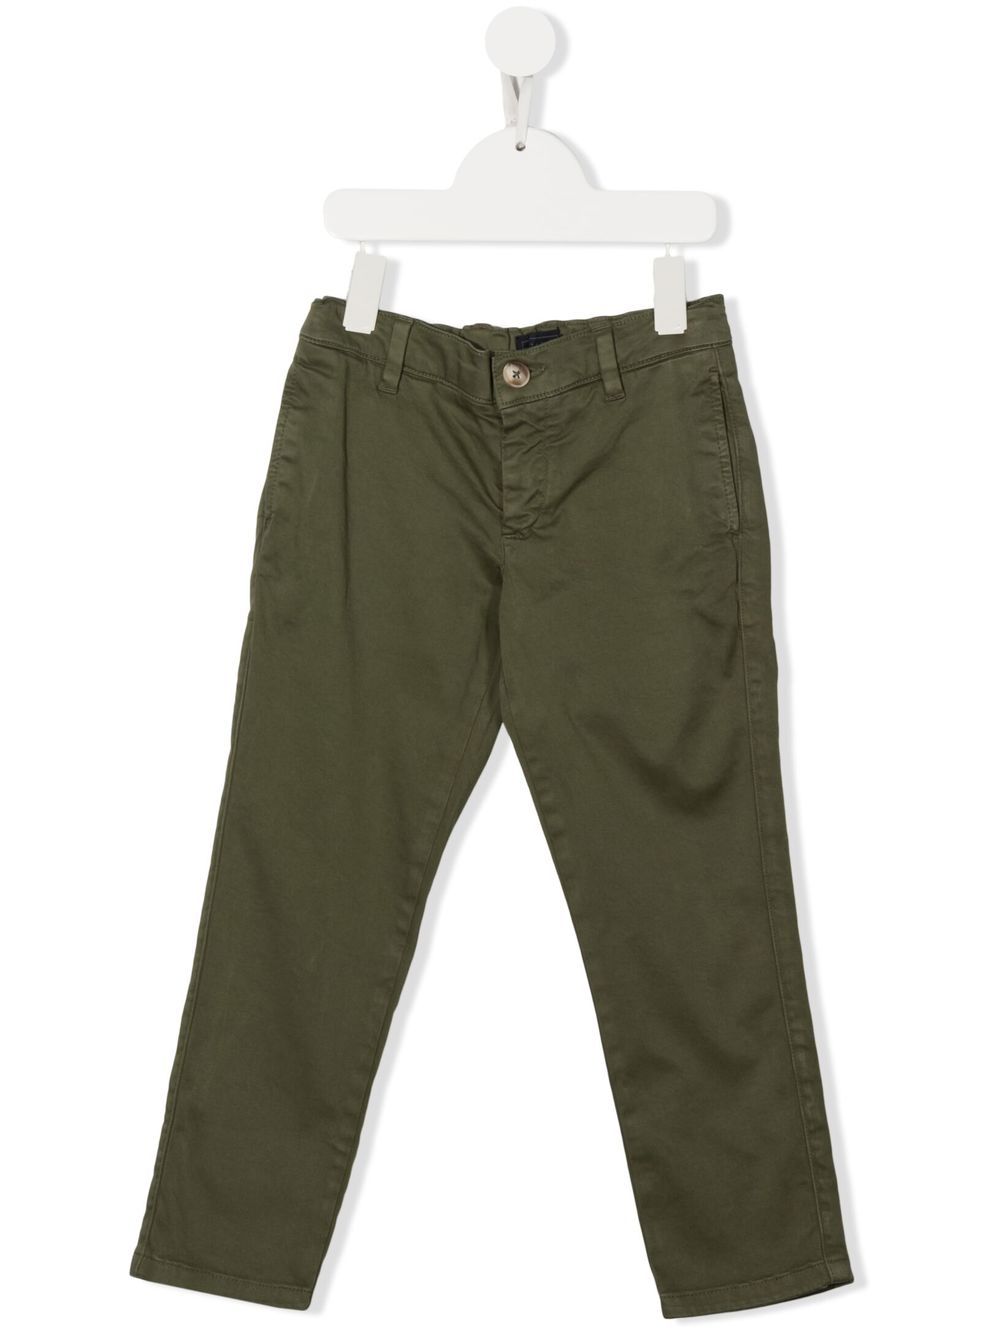 Pantalone verde per bambino